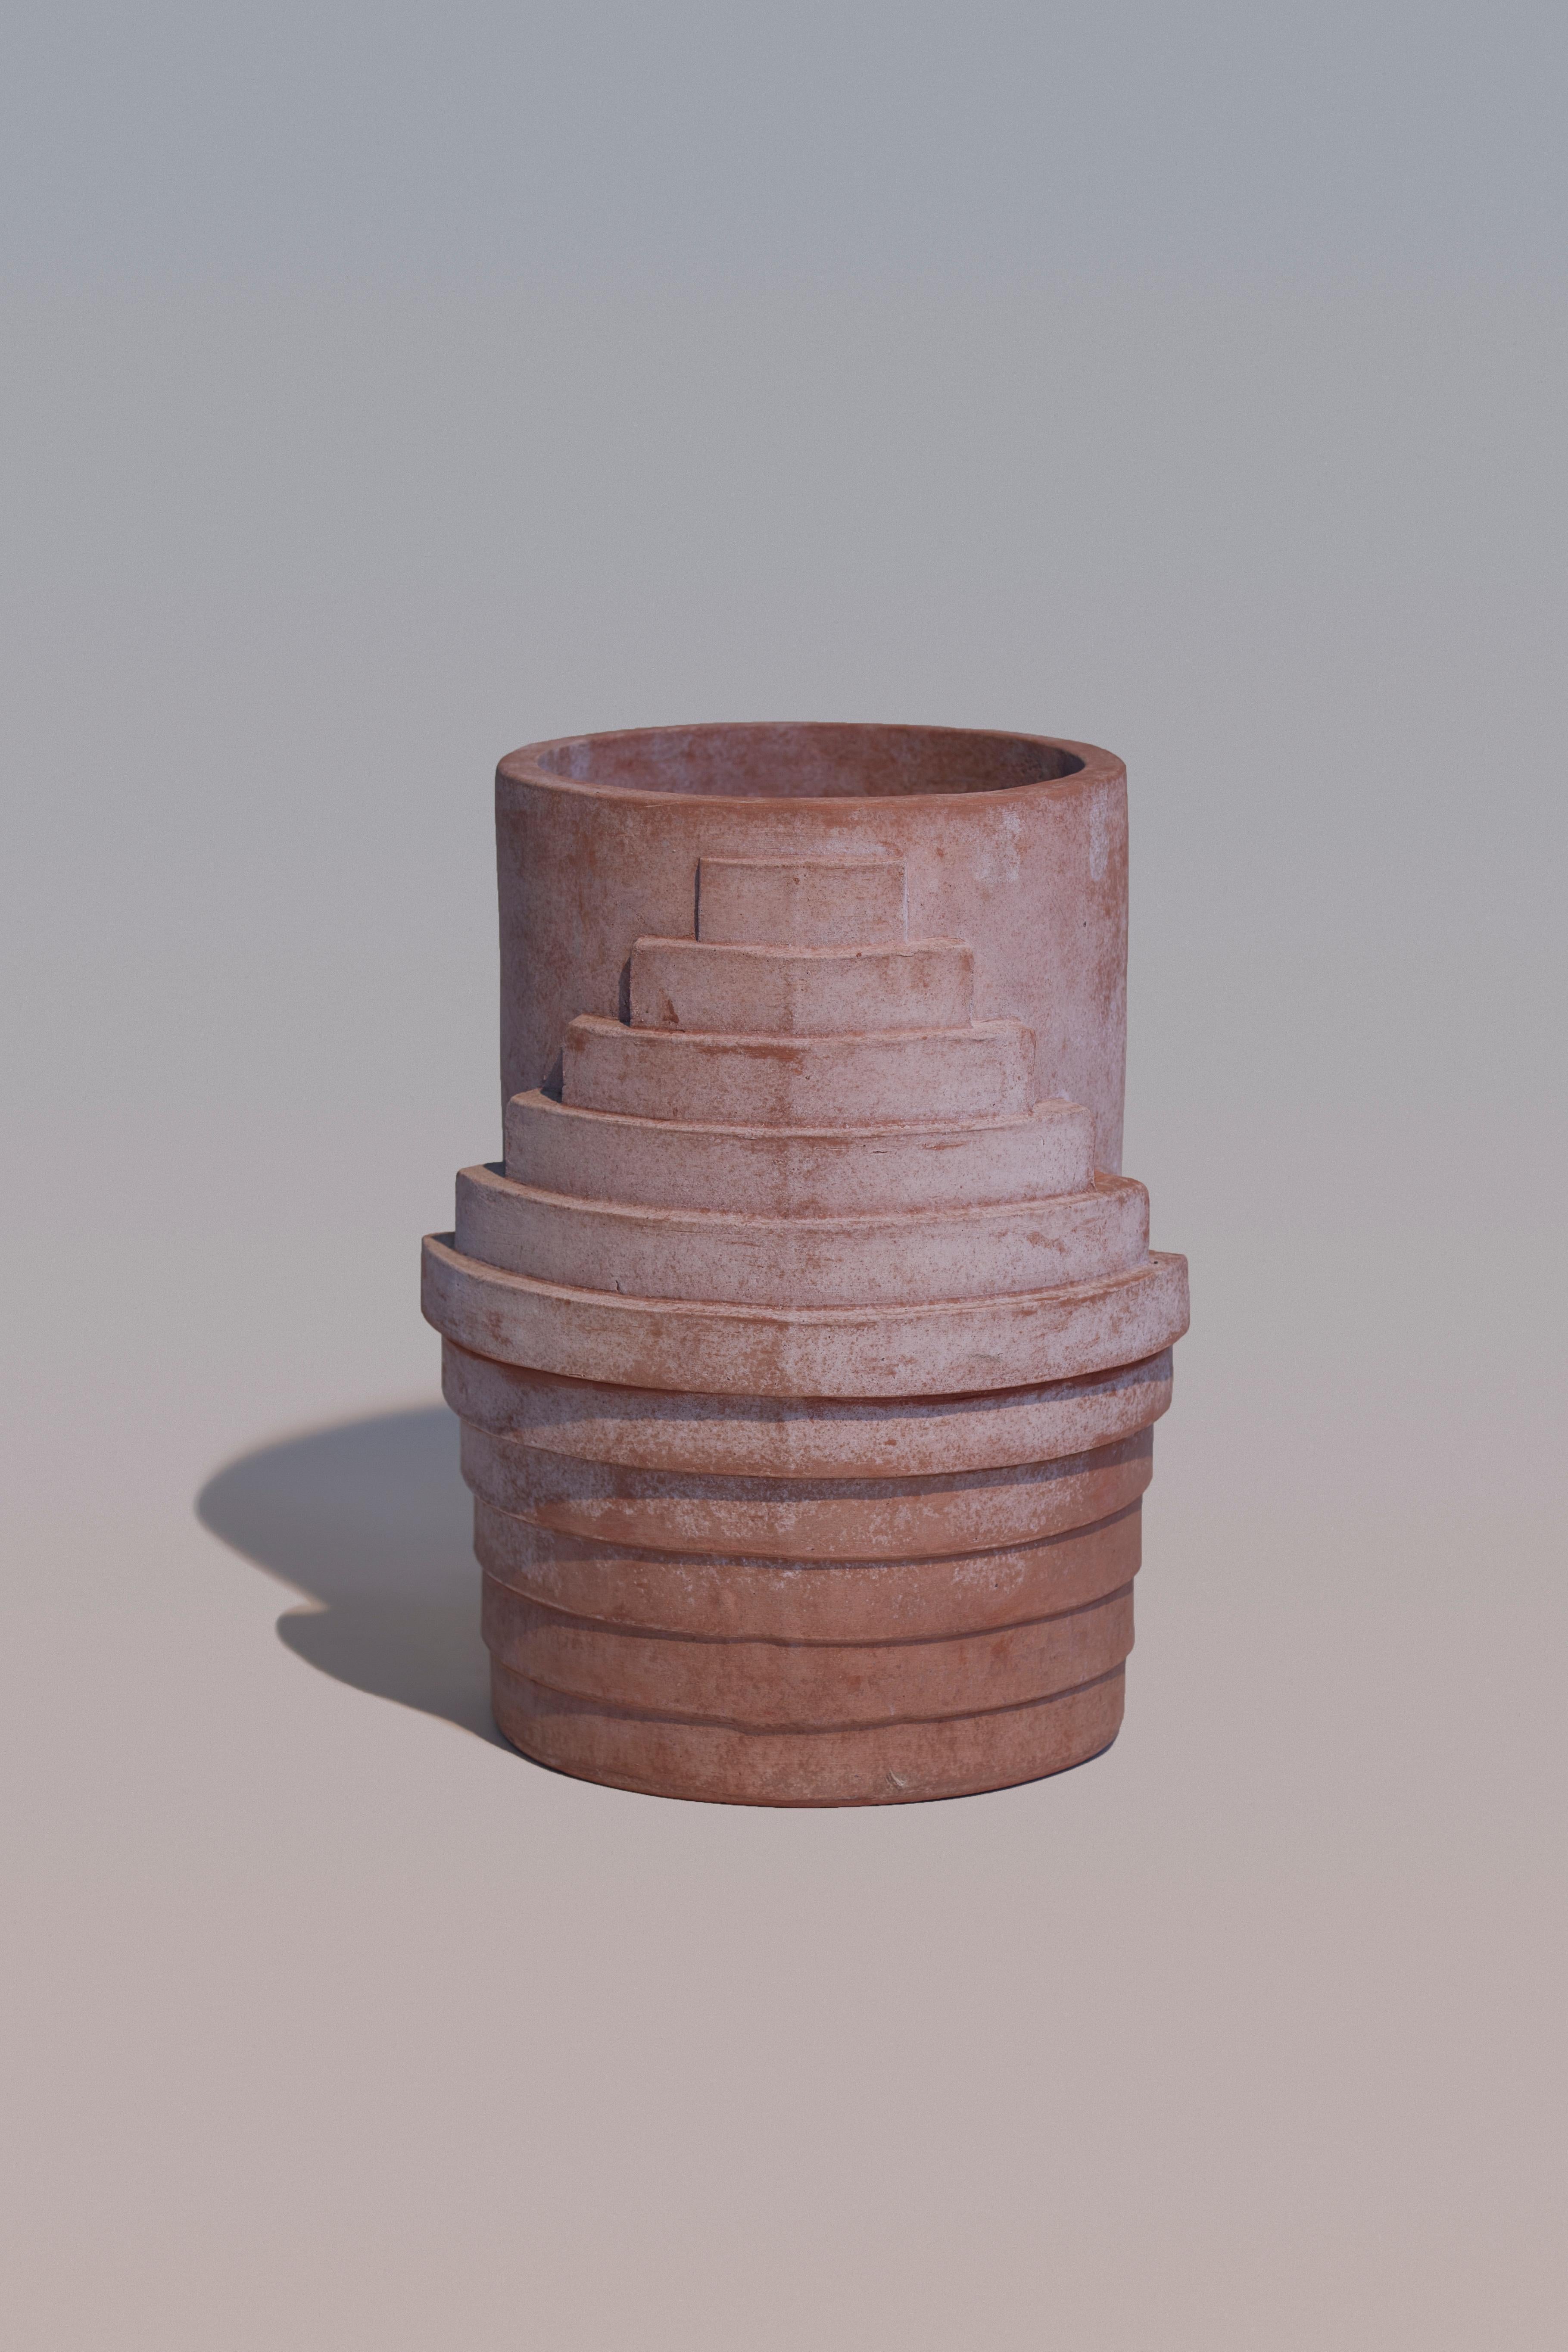 Handmade ceramic vase by Masquespacio for Poggi Ugo.